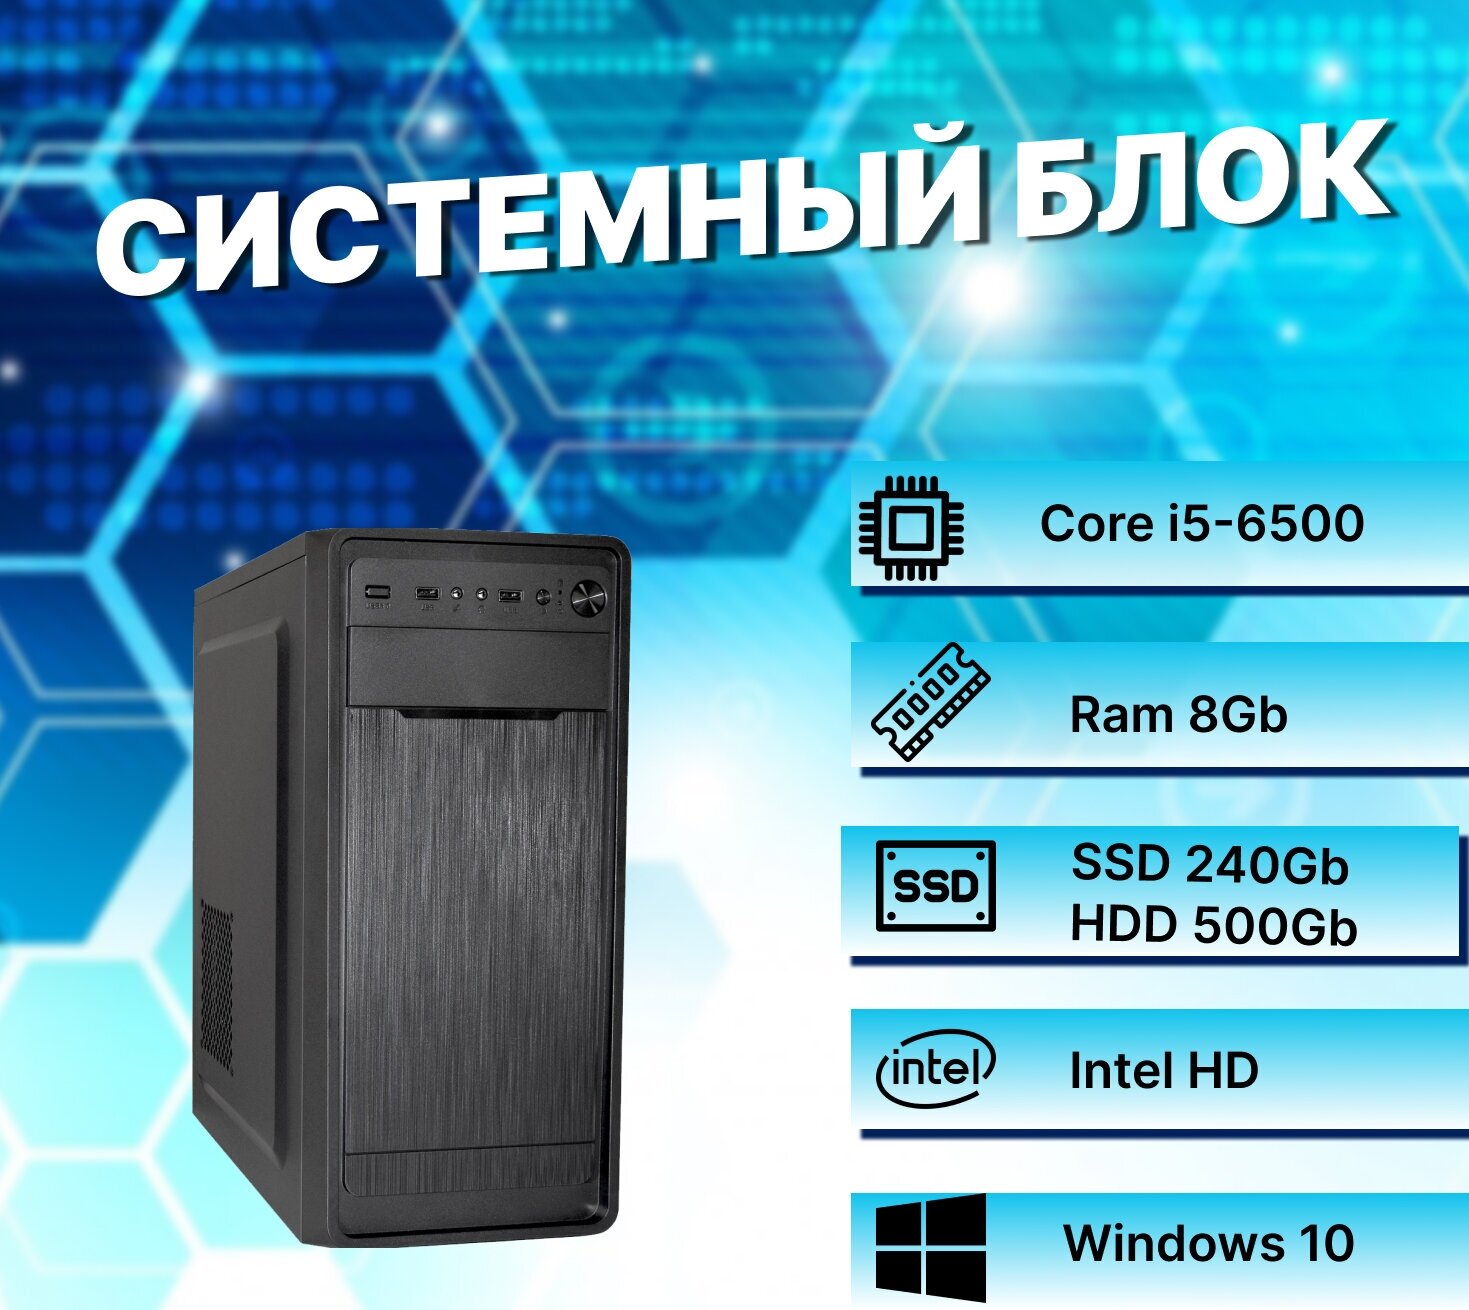 Системный блок Intel Core I5-6500 (3.2ГГц)/ RAM 8Gb/ SSD 240Gb/ HDD 500Gb/ Intel HD/ Windows 10 Pro